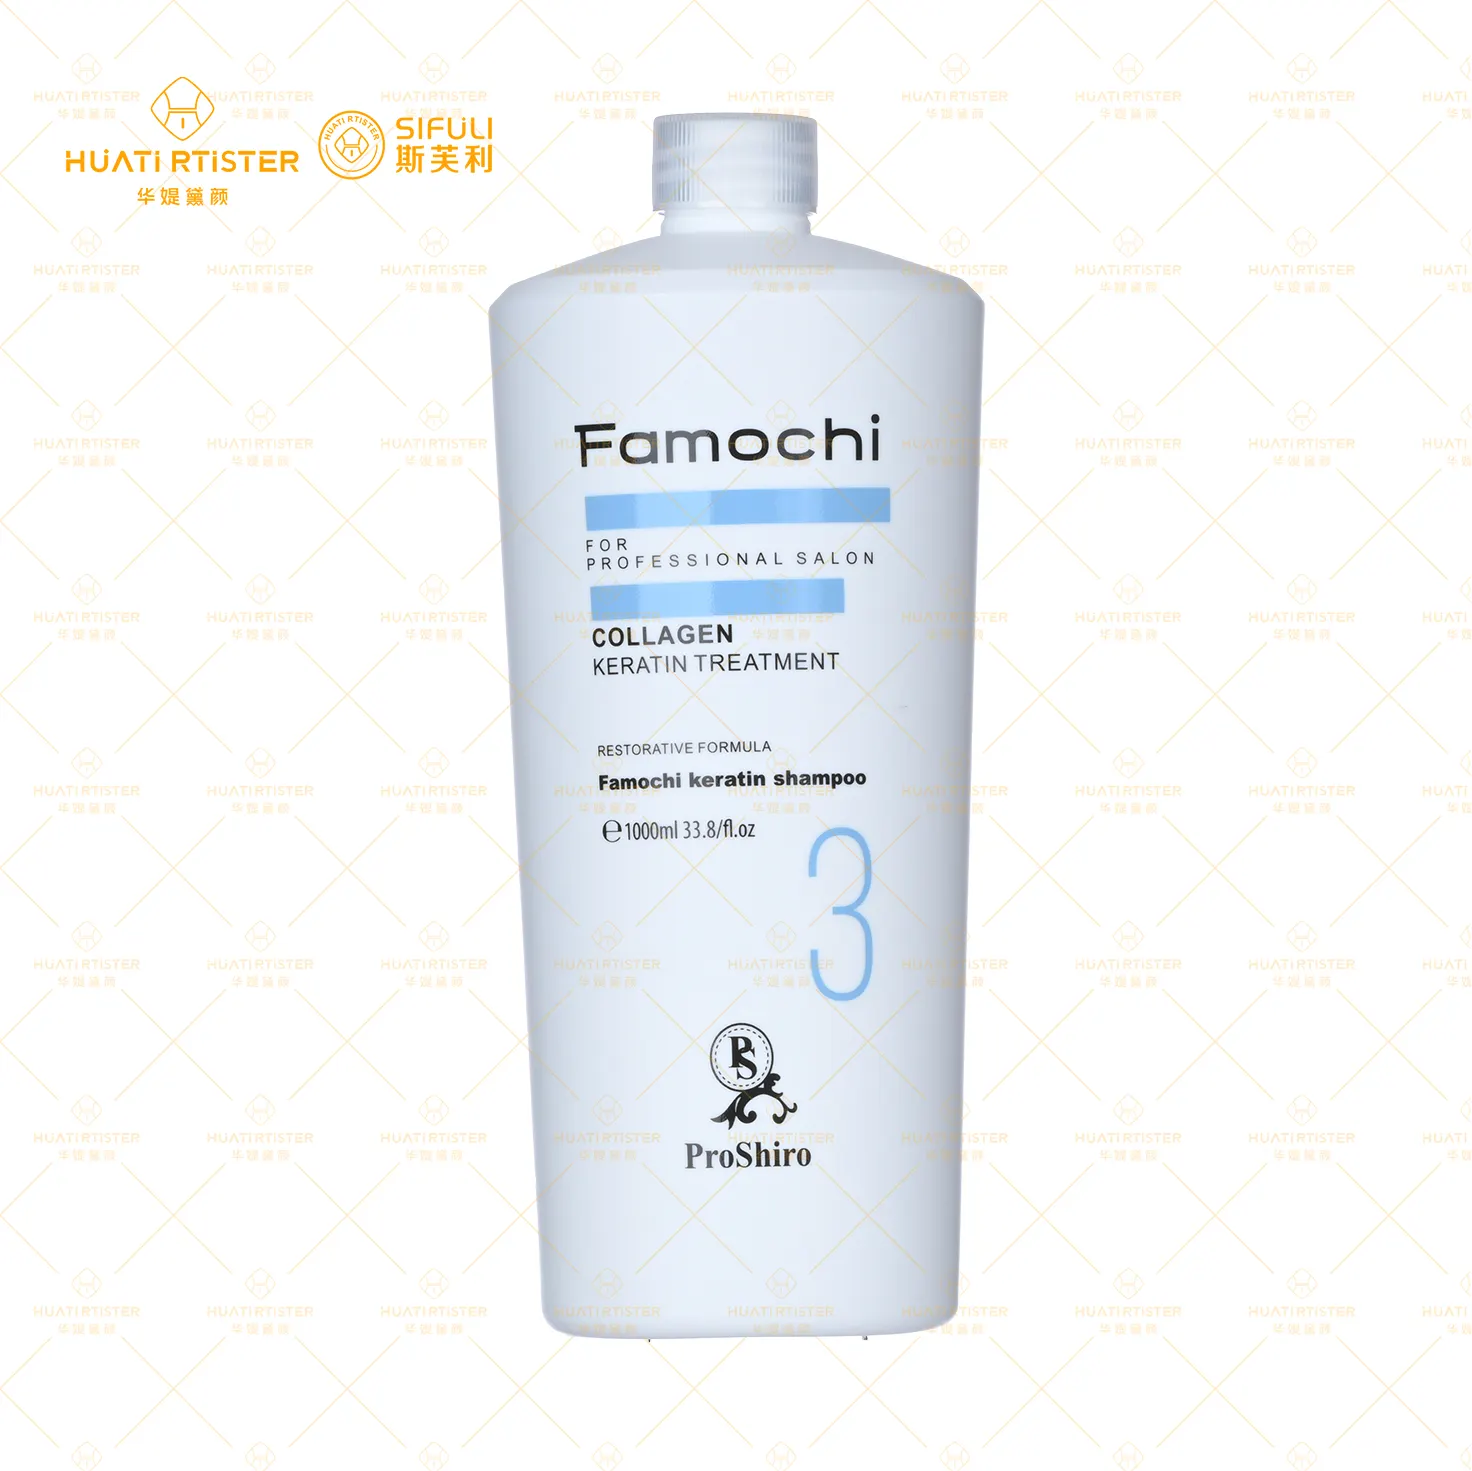 Huati Sifuli Famochi Factory brazilian protein hair treatment bio keratin shampoo hair shampoo and conditioner treatment 1000ml